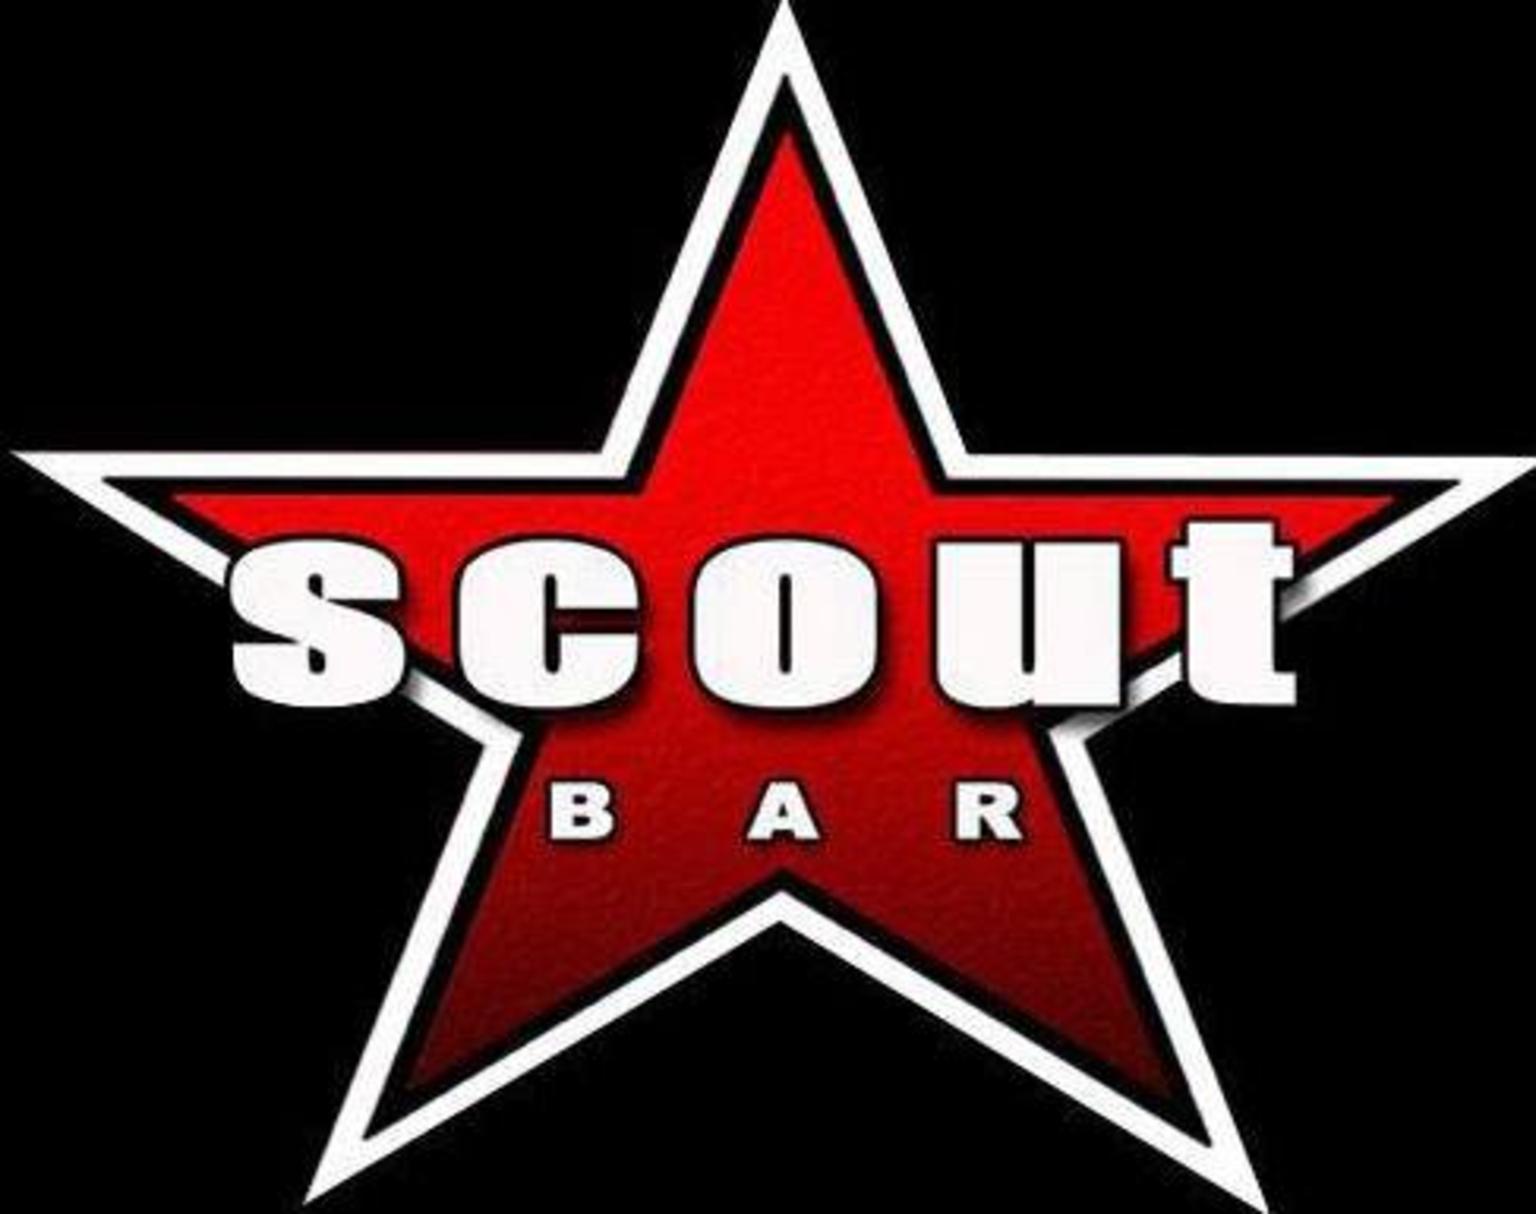 Scout Bar